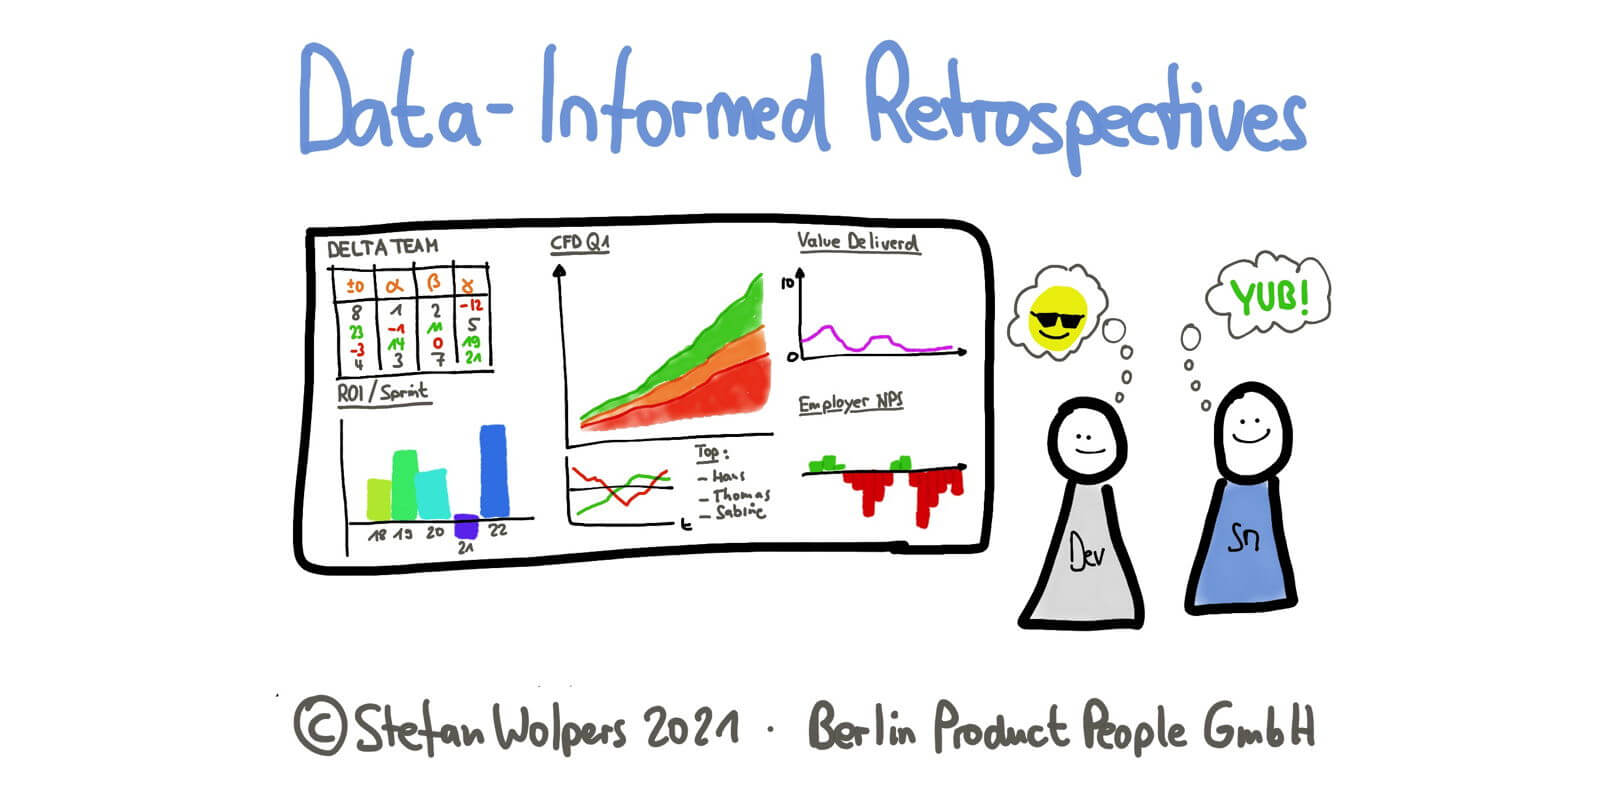 Data-Informed Retrospectives — Berlin Product People GmbH